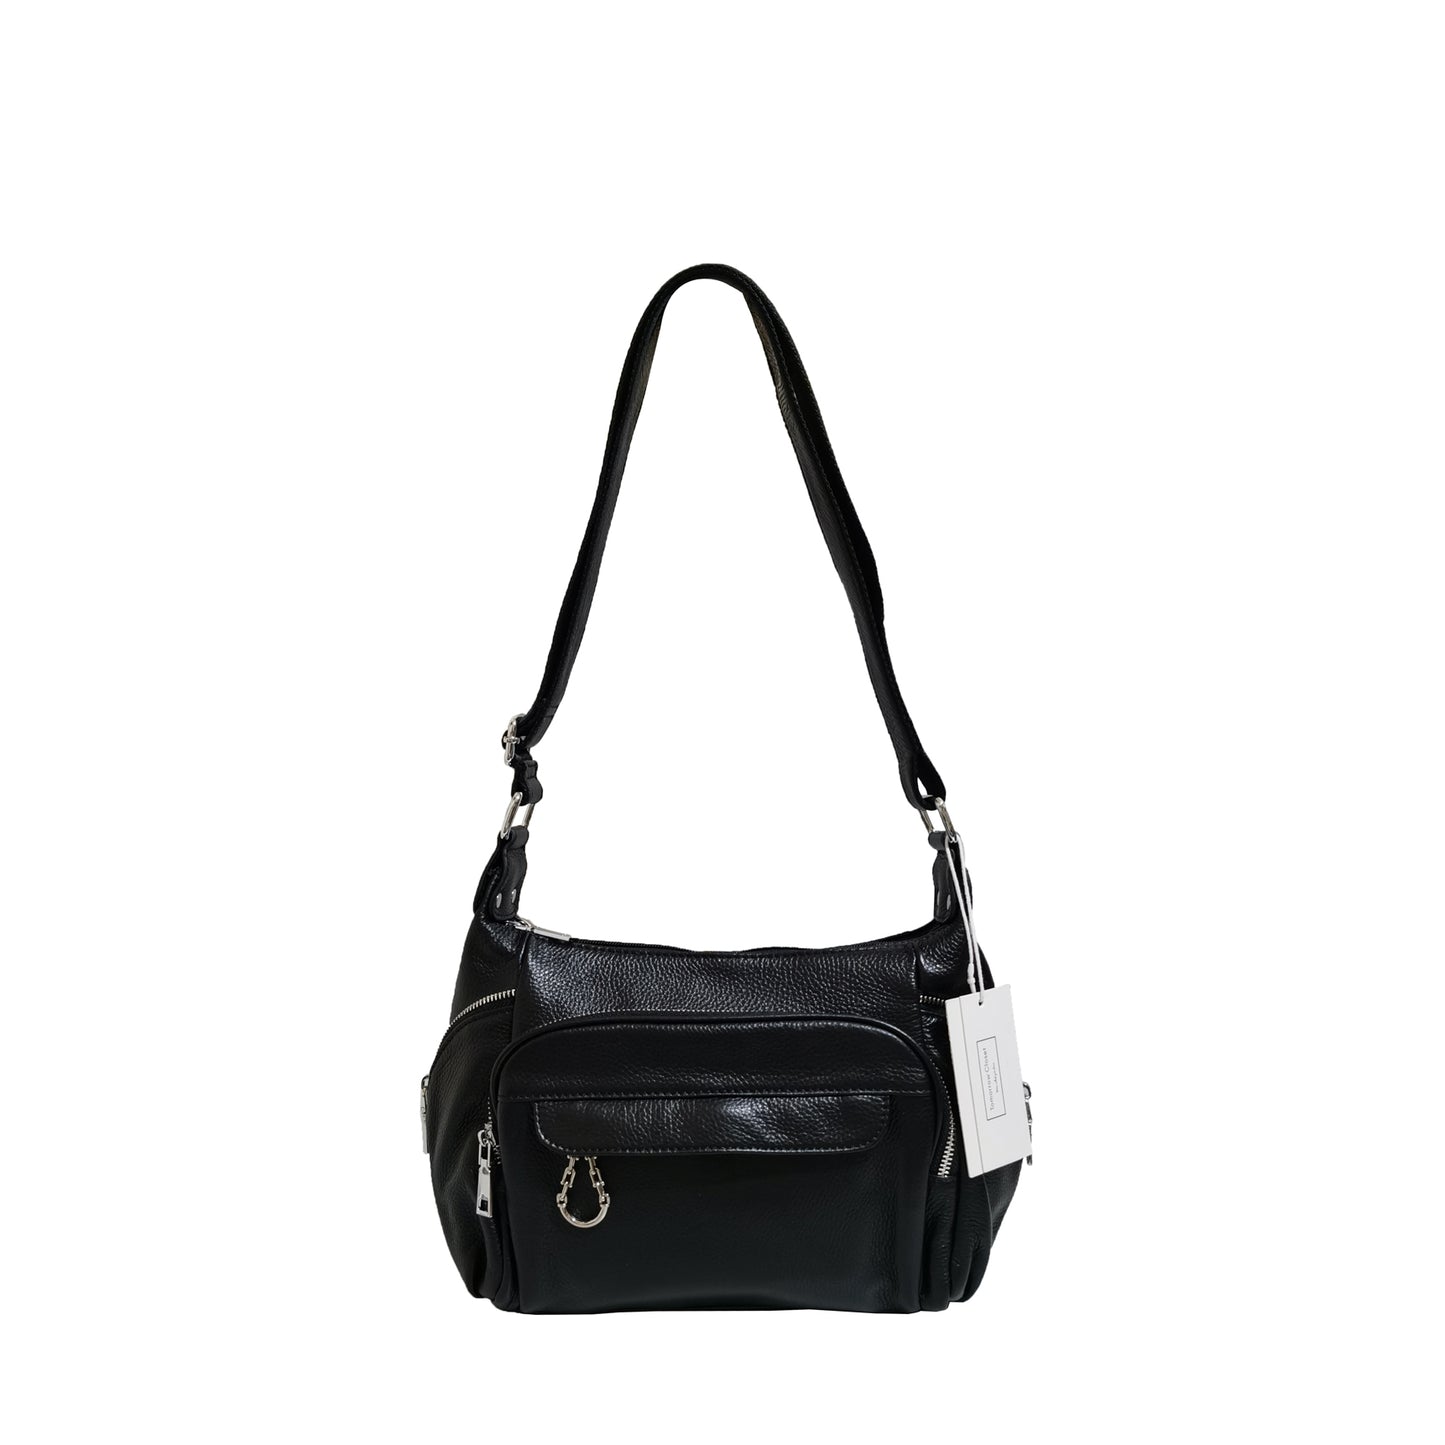 Davel design women's and men's unisex genuine cowhide leather handbag